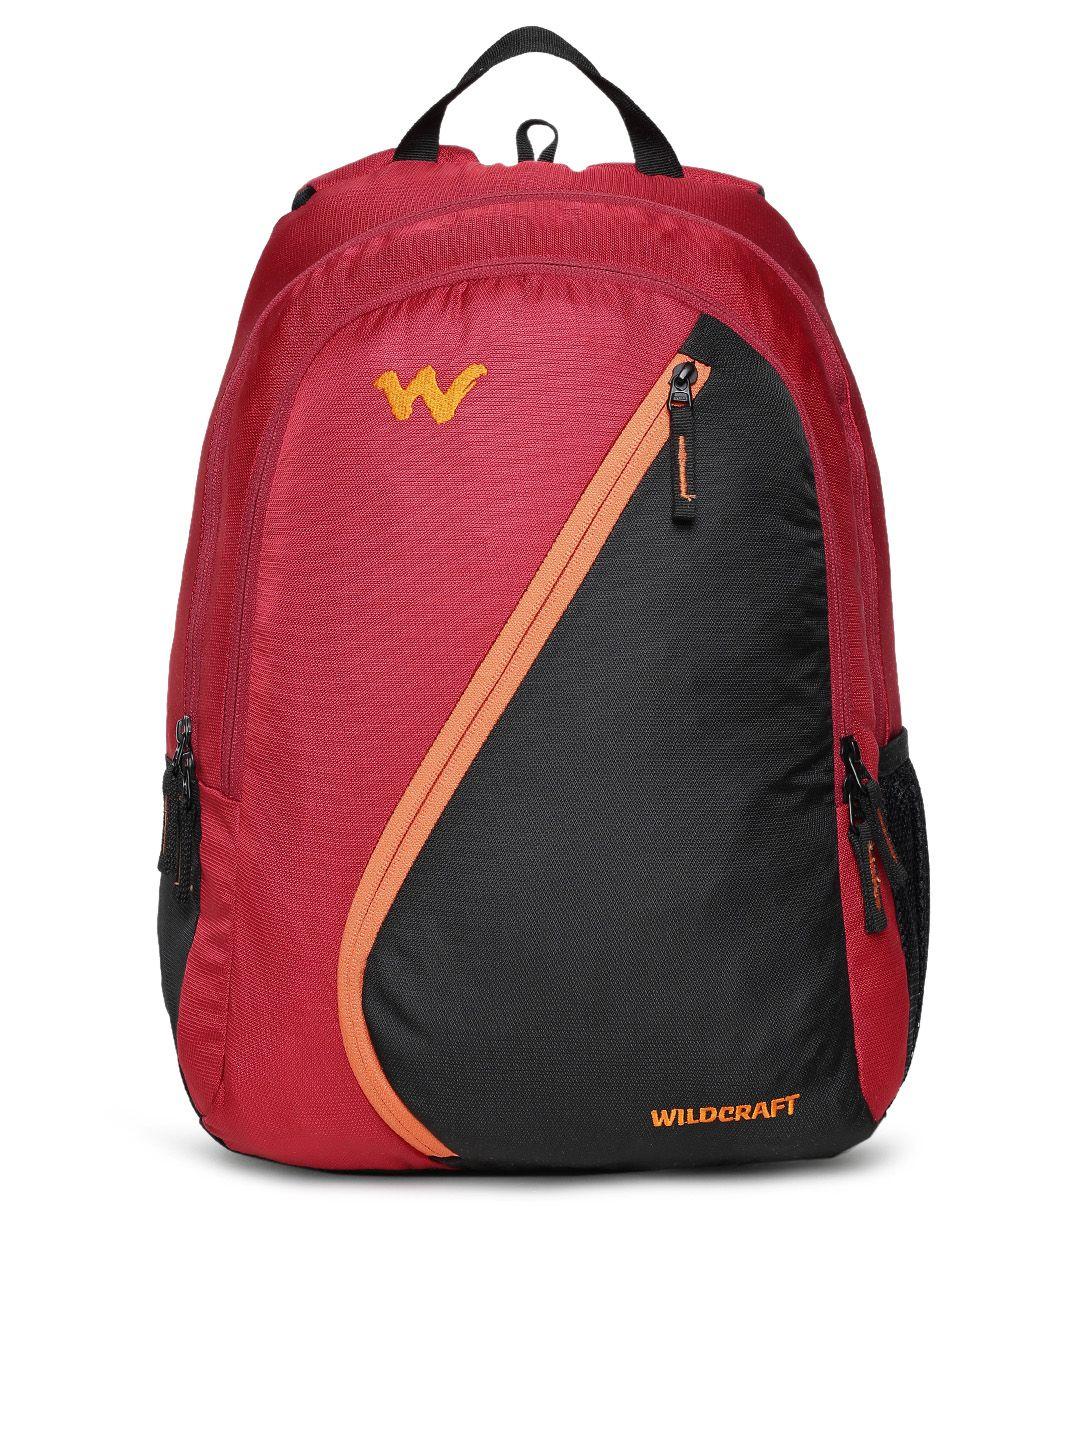 wildcraft unisex red & black colourblocked backpack